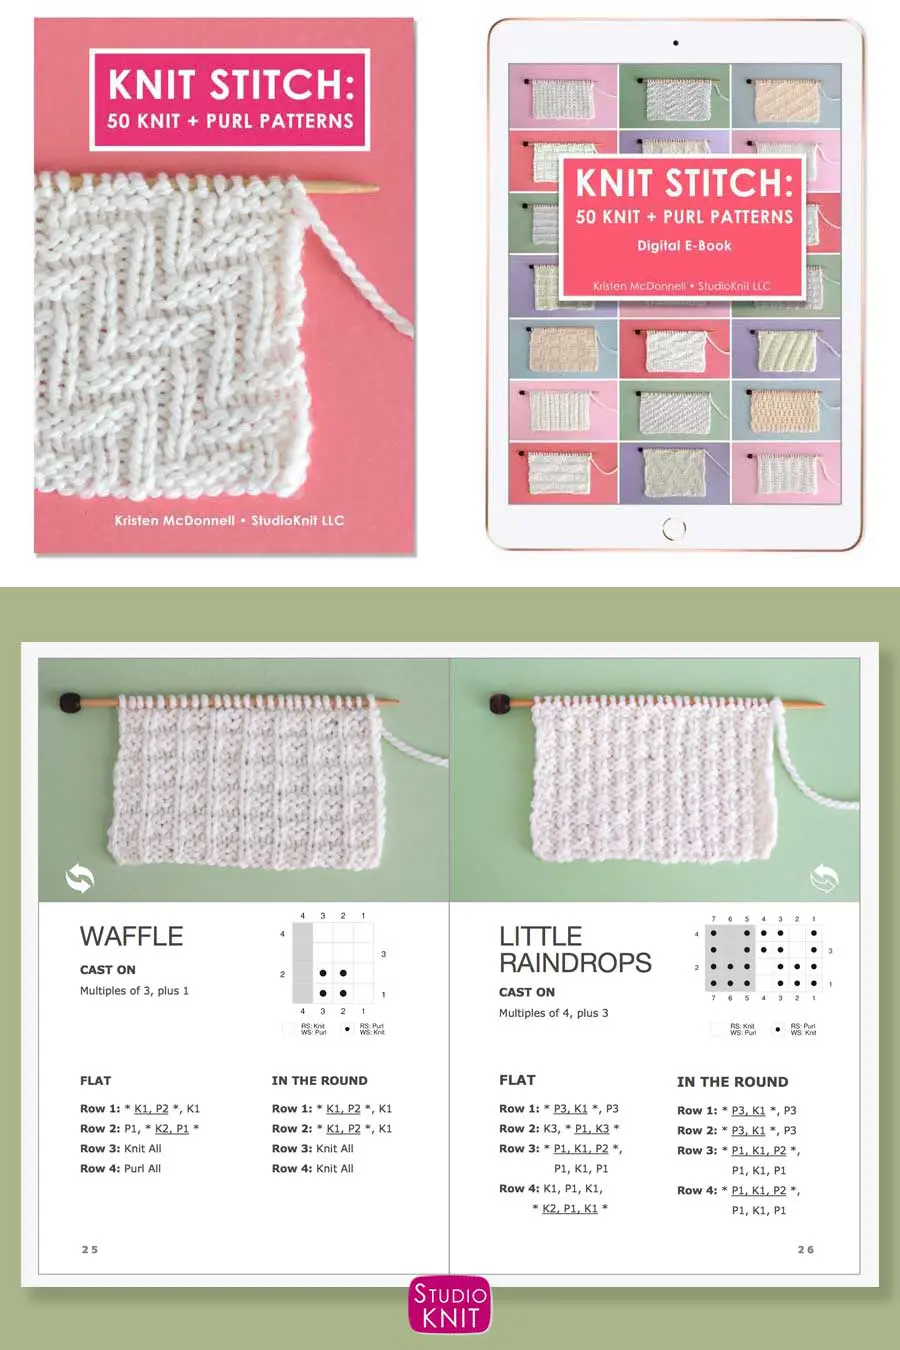 Knit Stitch Pattern Book with Waffle and Little Raindrops Stitch Patterns by Studio Knit